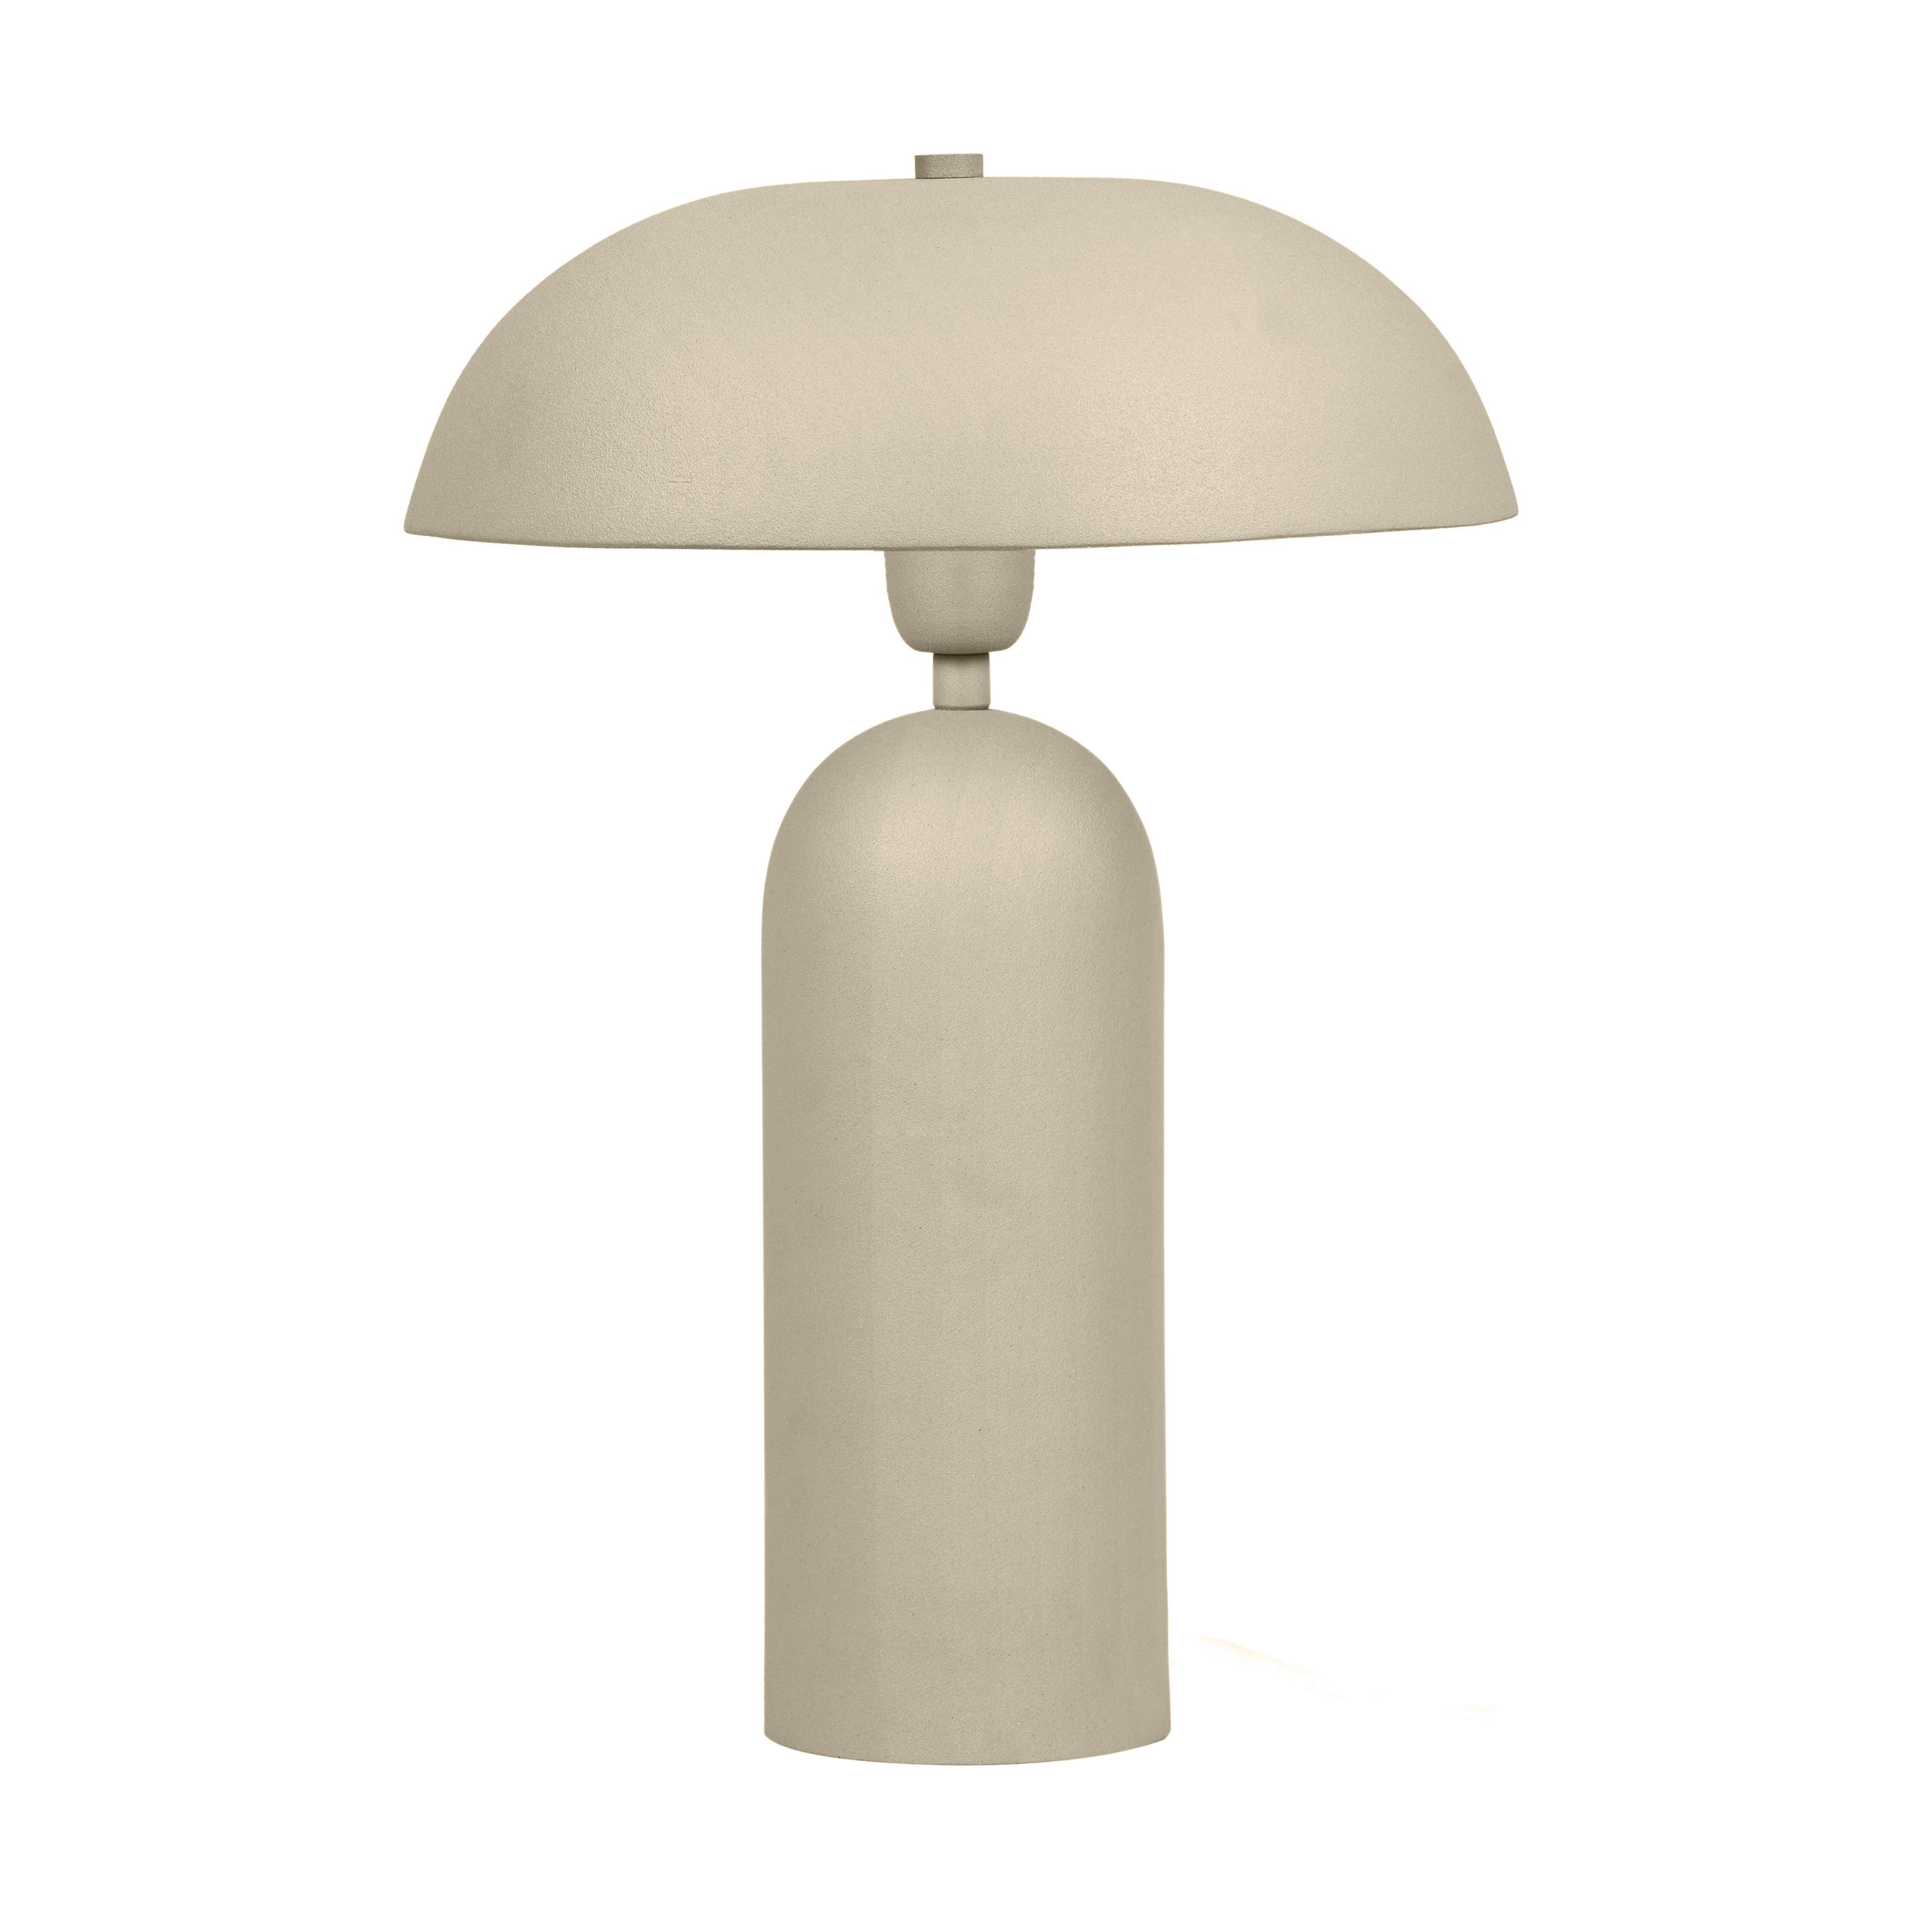 Tov Furniture Table Lamps - Sammi Taupe Table Lamp